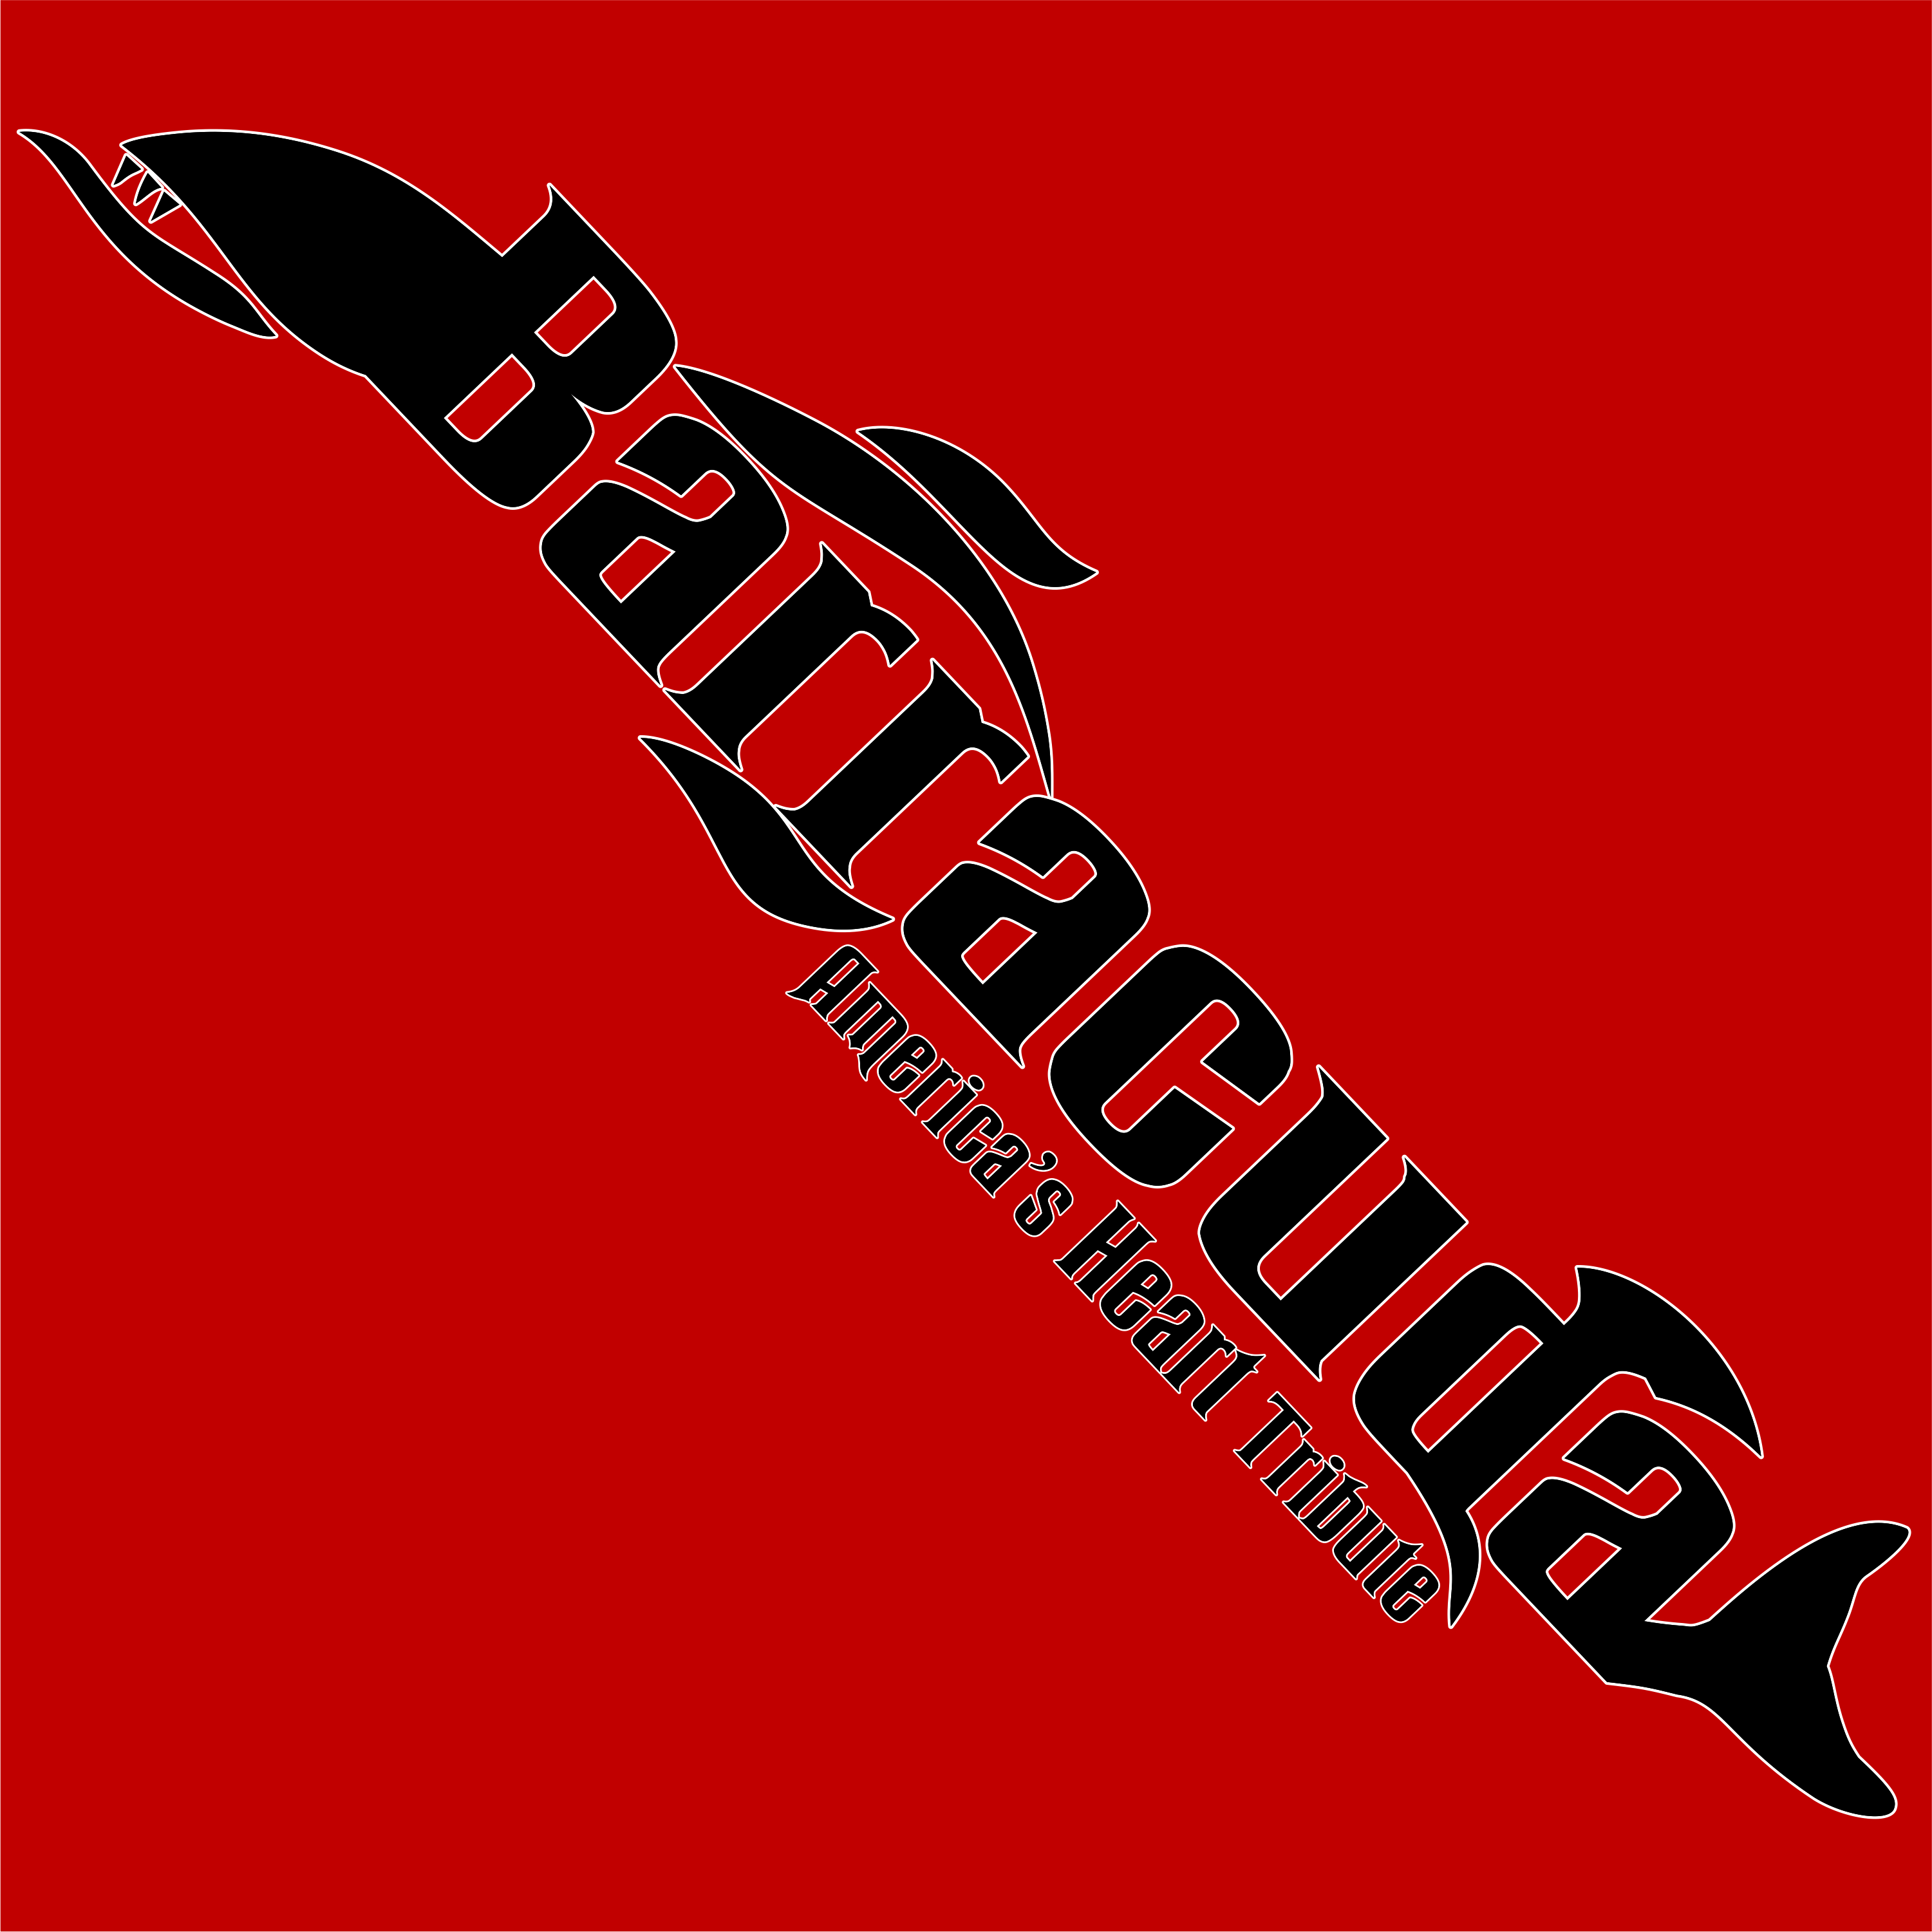 Heart - Barracuda  Birds of Prey OST 